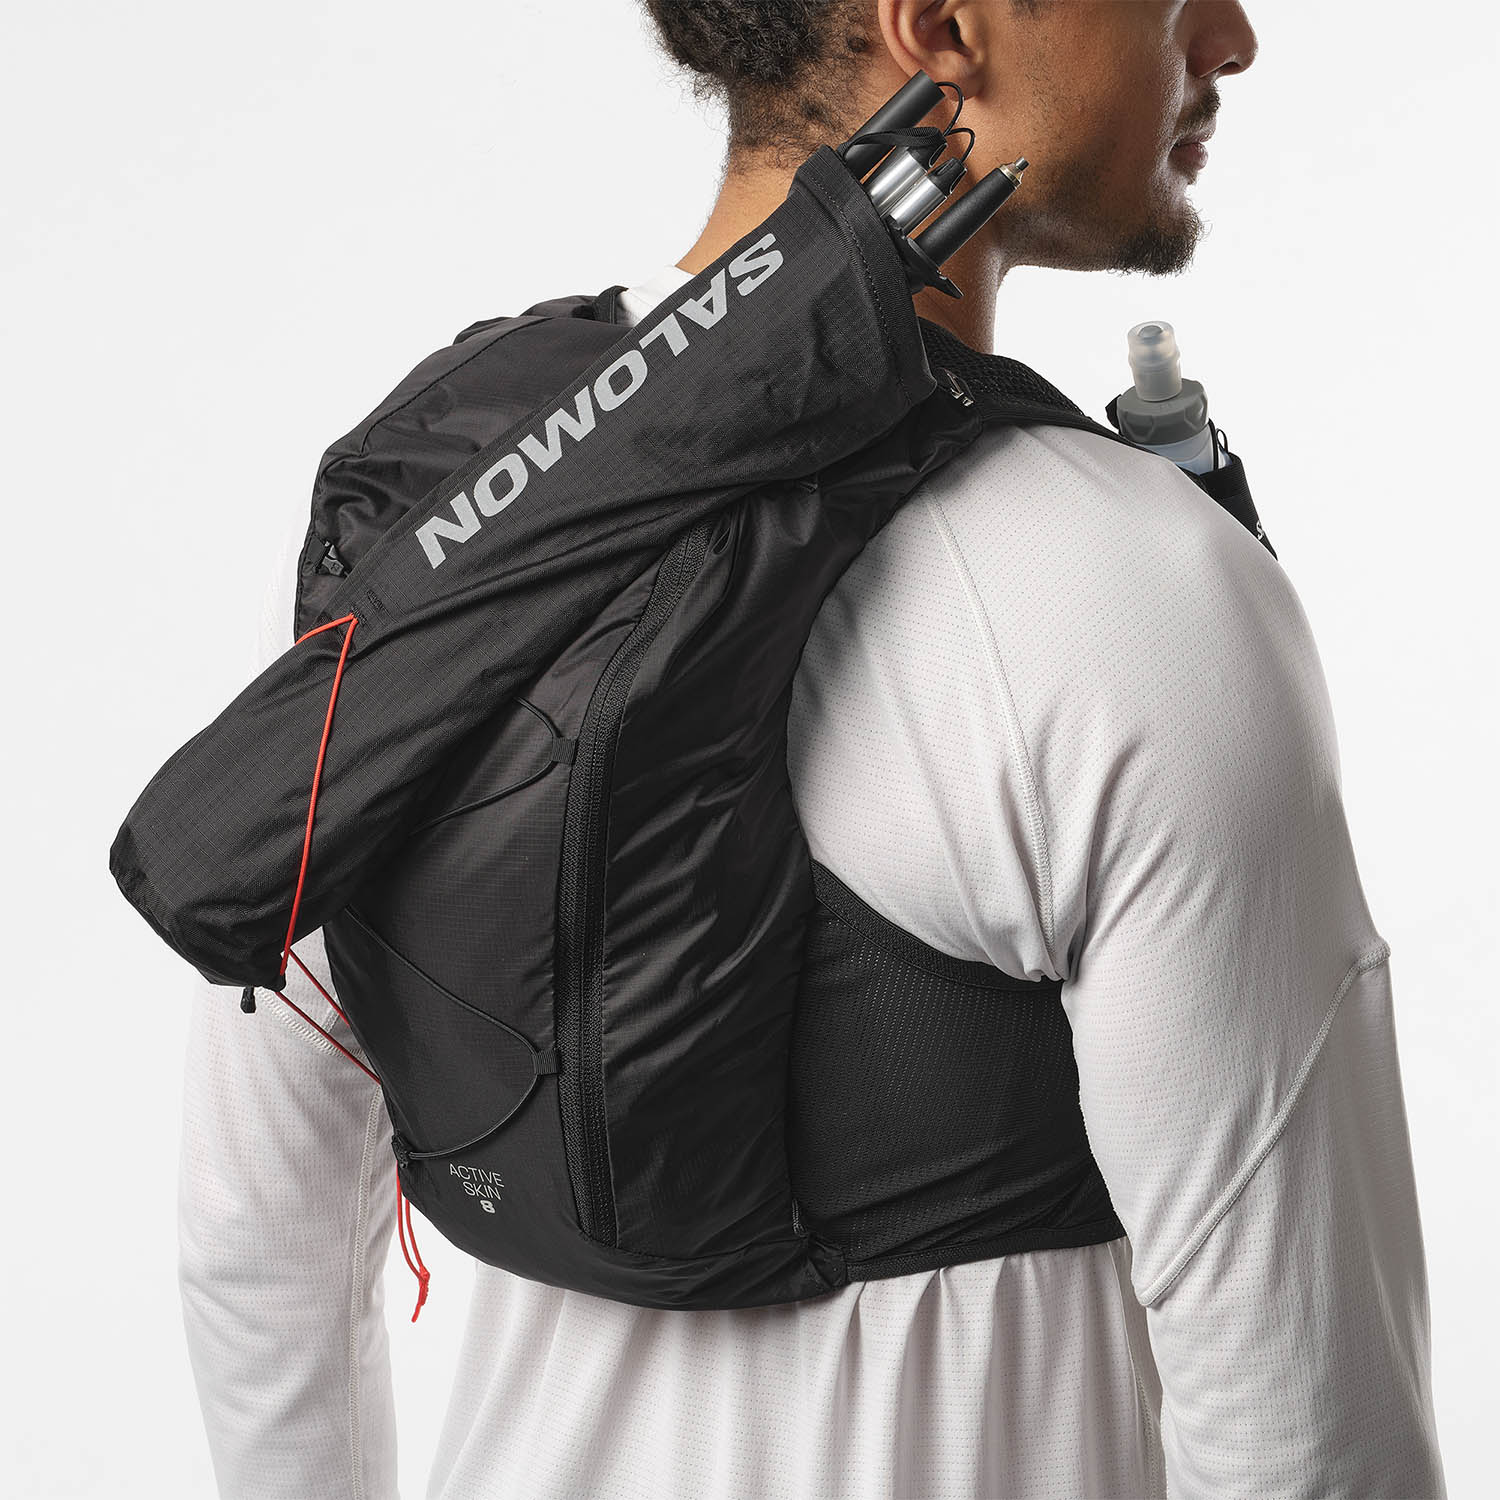 Salomon Active Skin 8 Set Backpack - Black/Metal